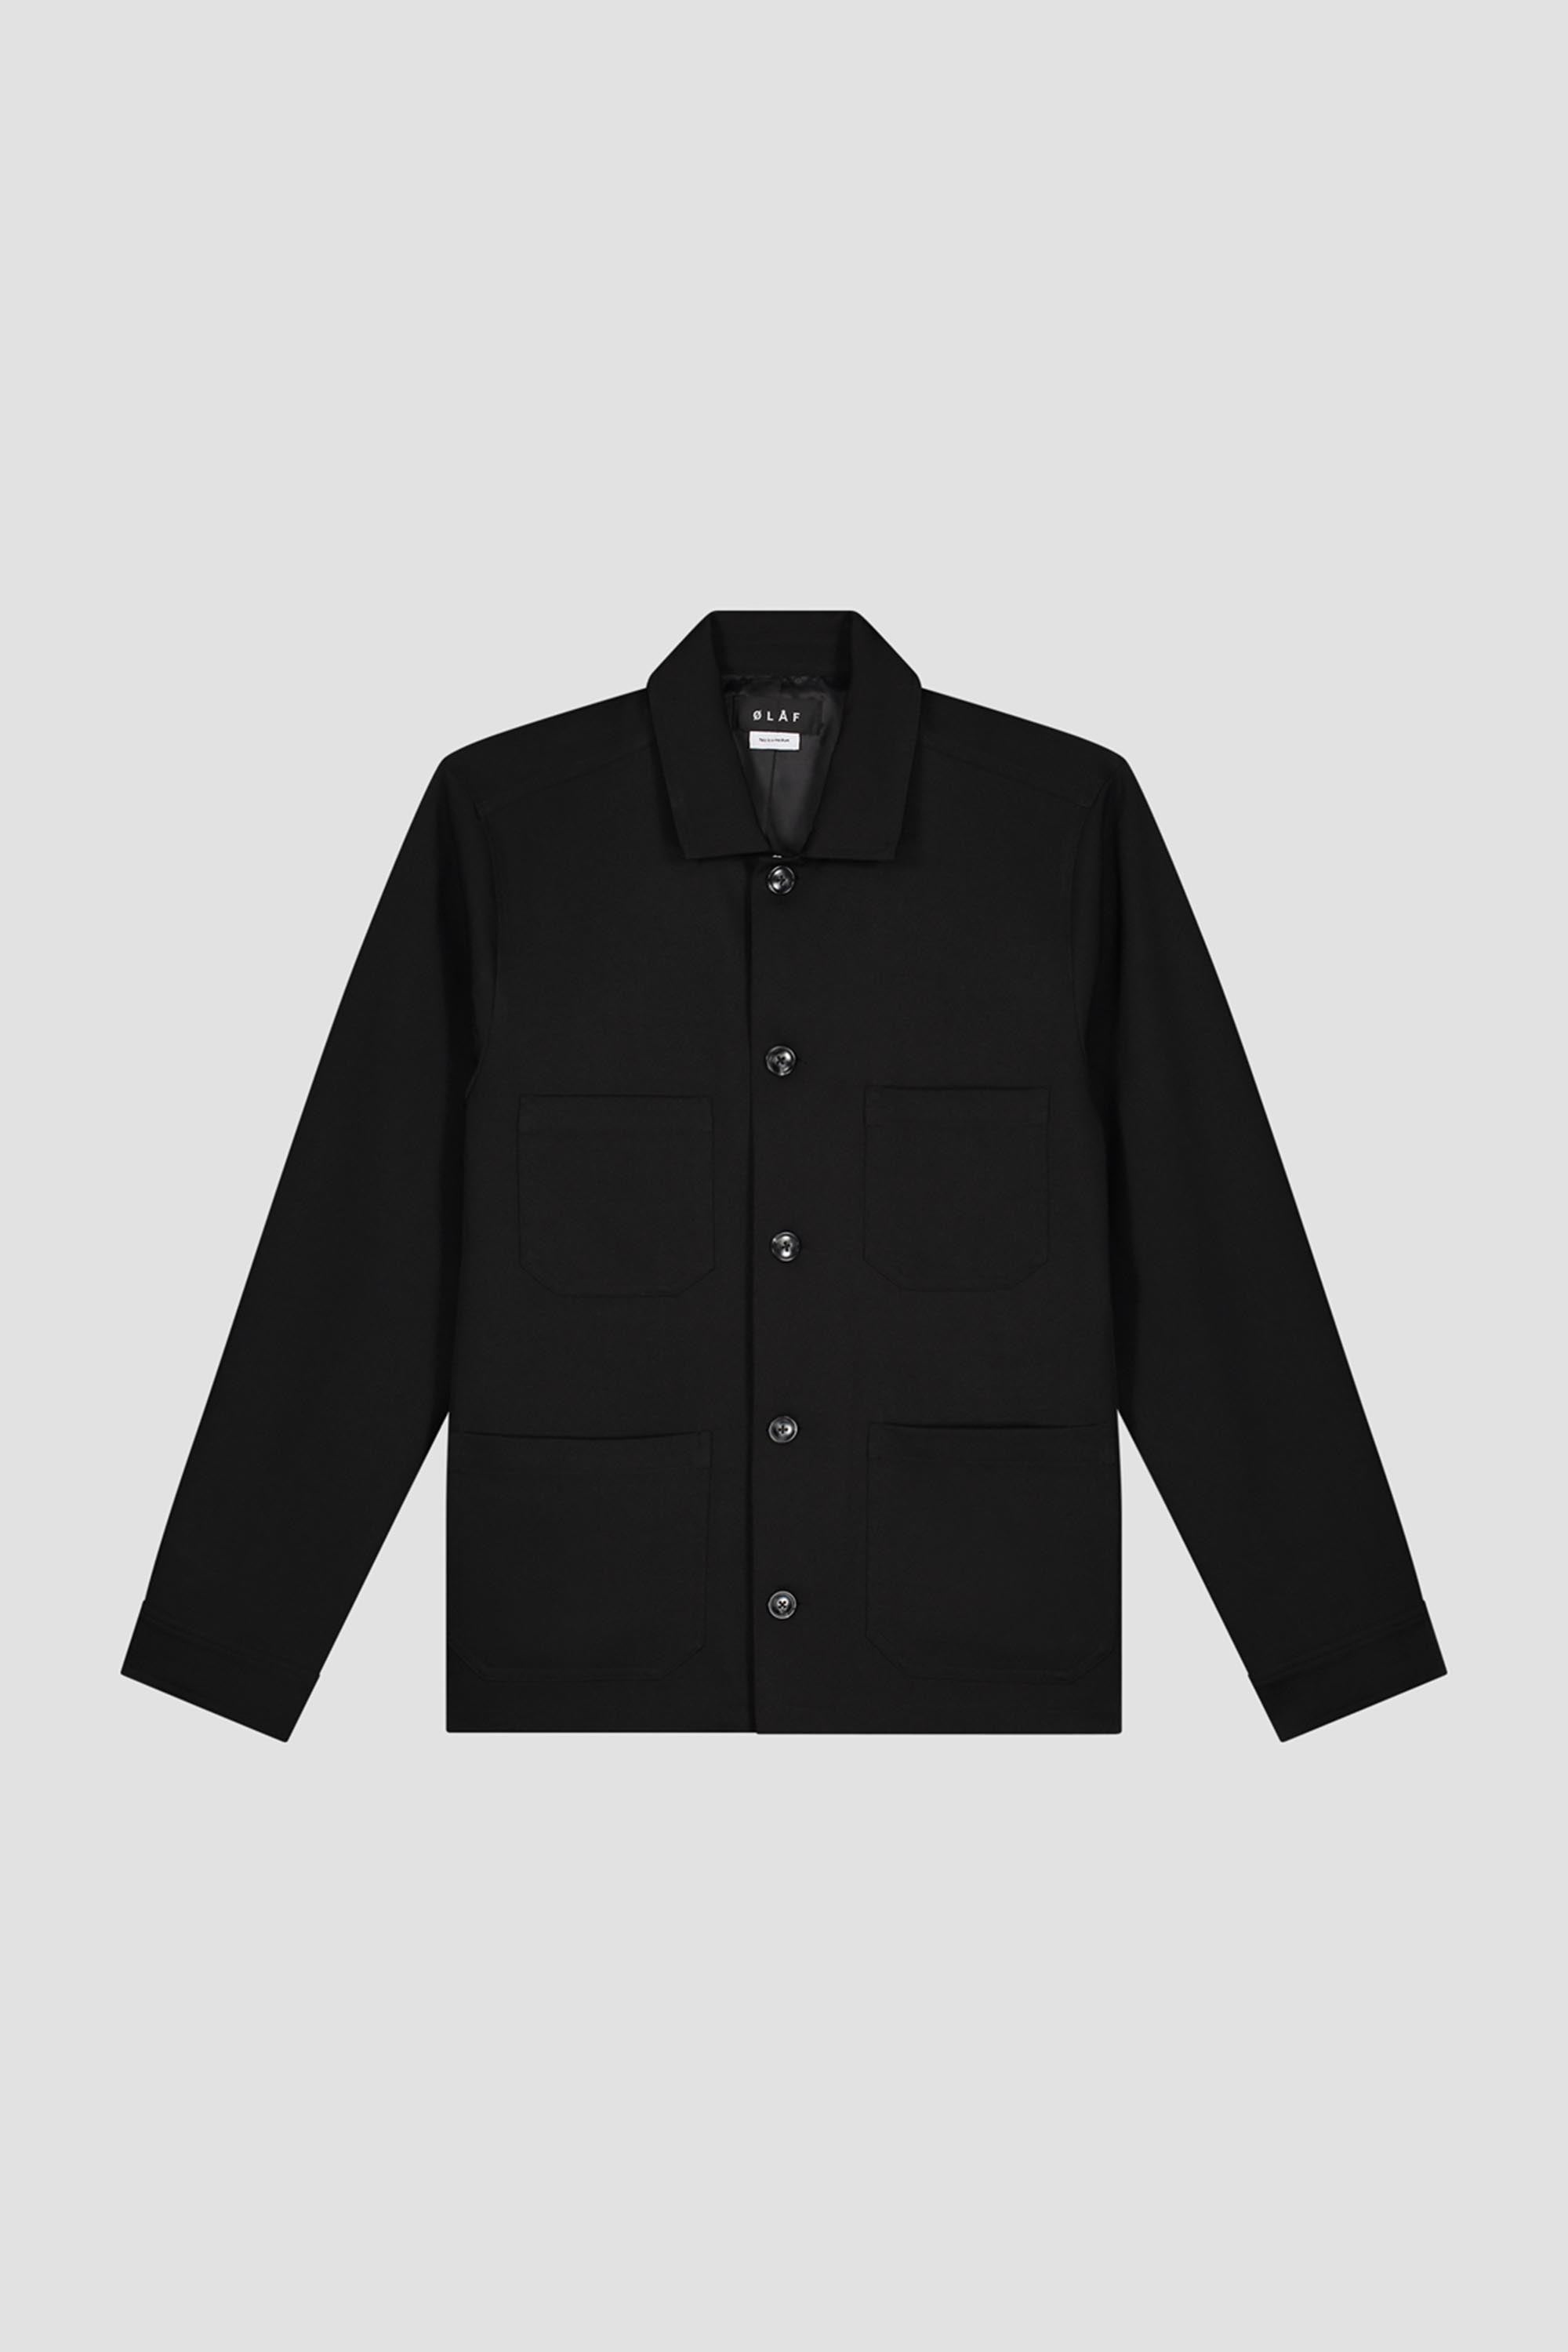 ØLÅF Workwear Blazer - Black